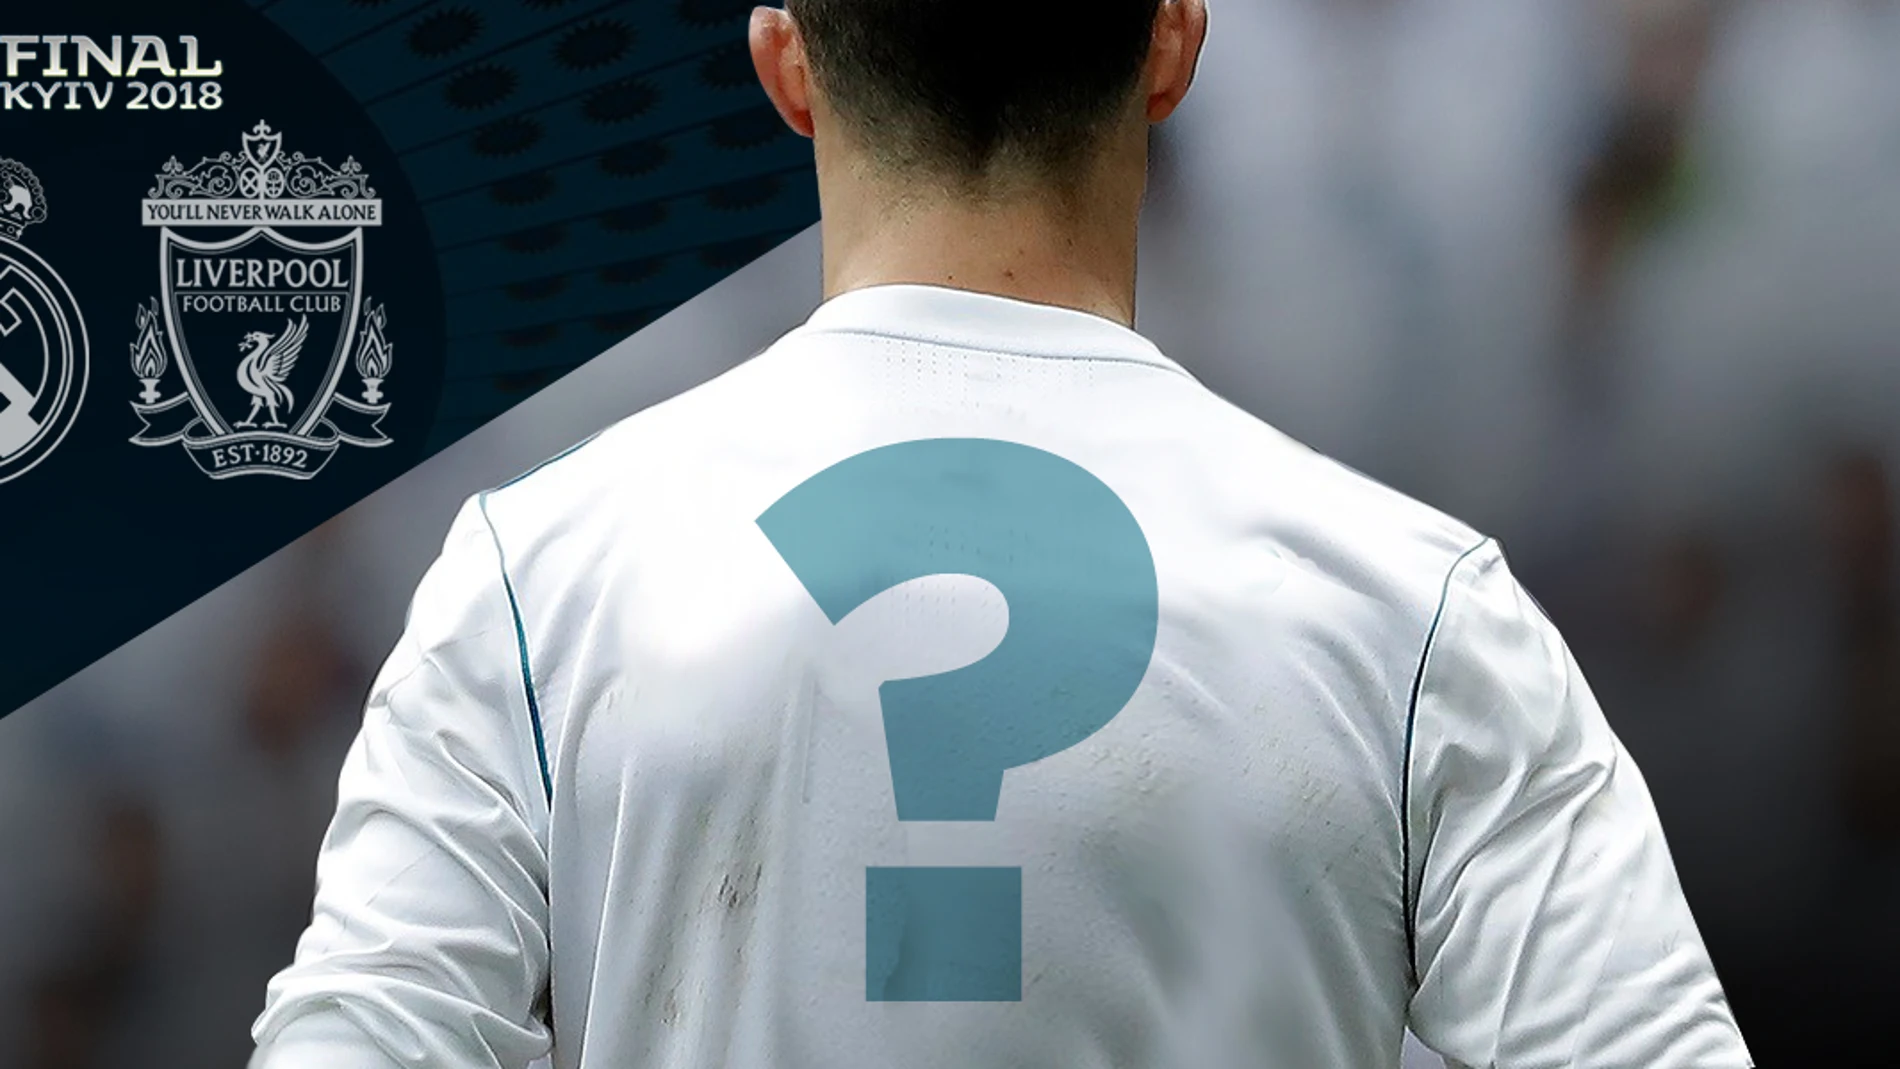 ¿Qué jugador del Madrid eres?